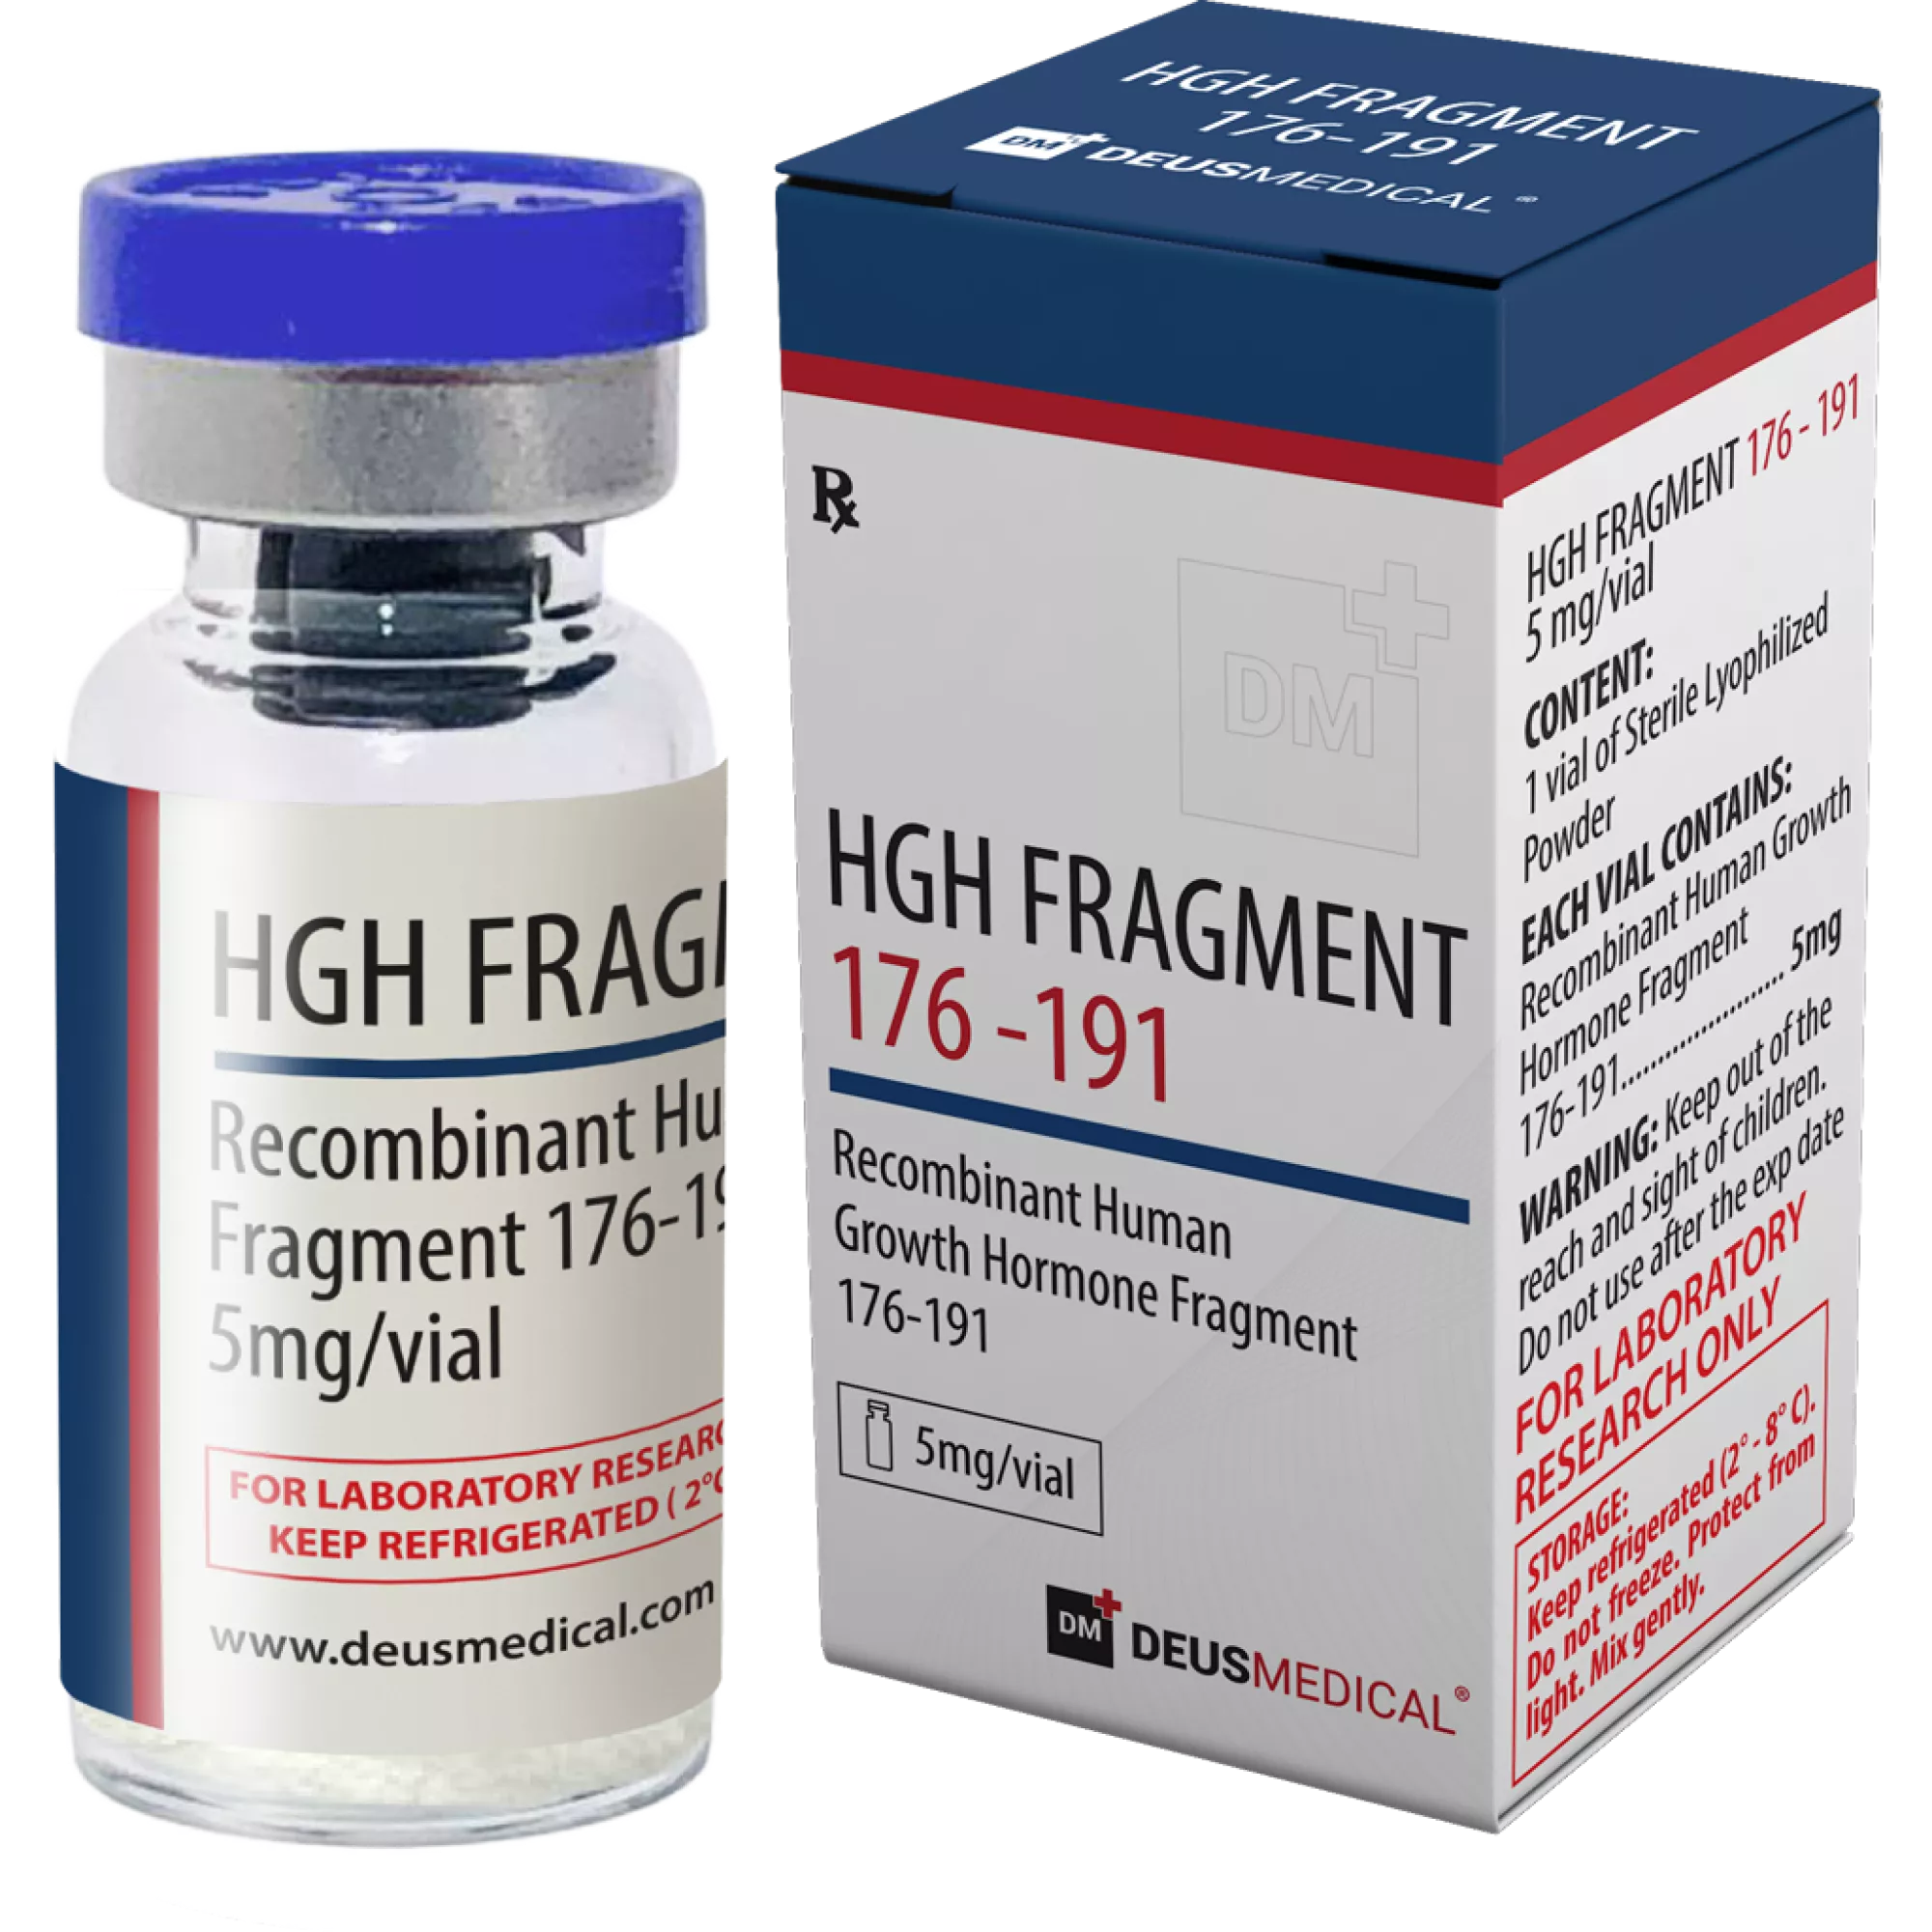 HGH FRAGMENT 176-191 (Recombinant Human Growth Hormone Fragment 176-191), Deus Medical, Buy Steroids Online - www.deuspower.shop